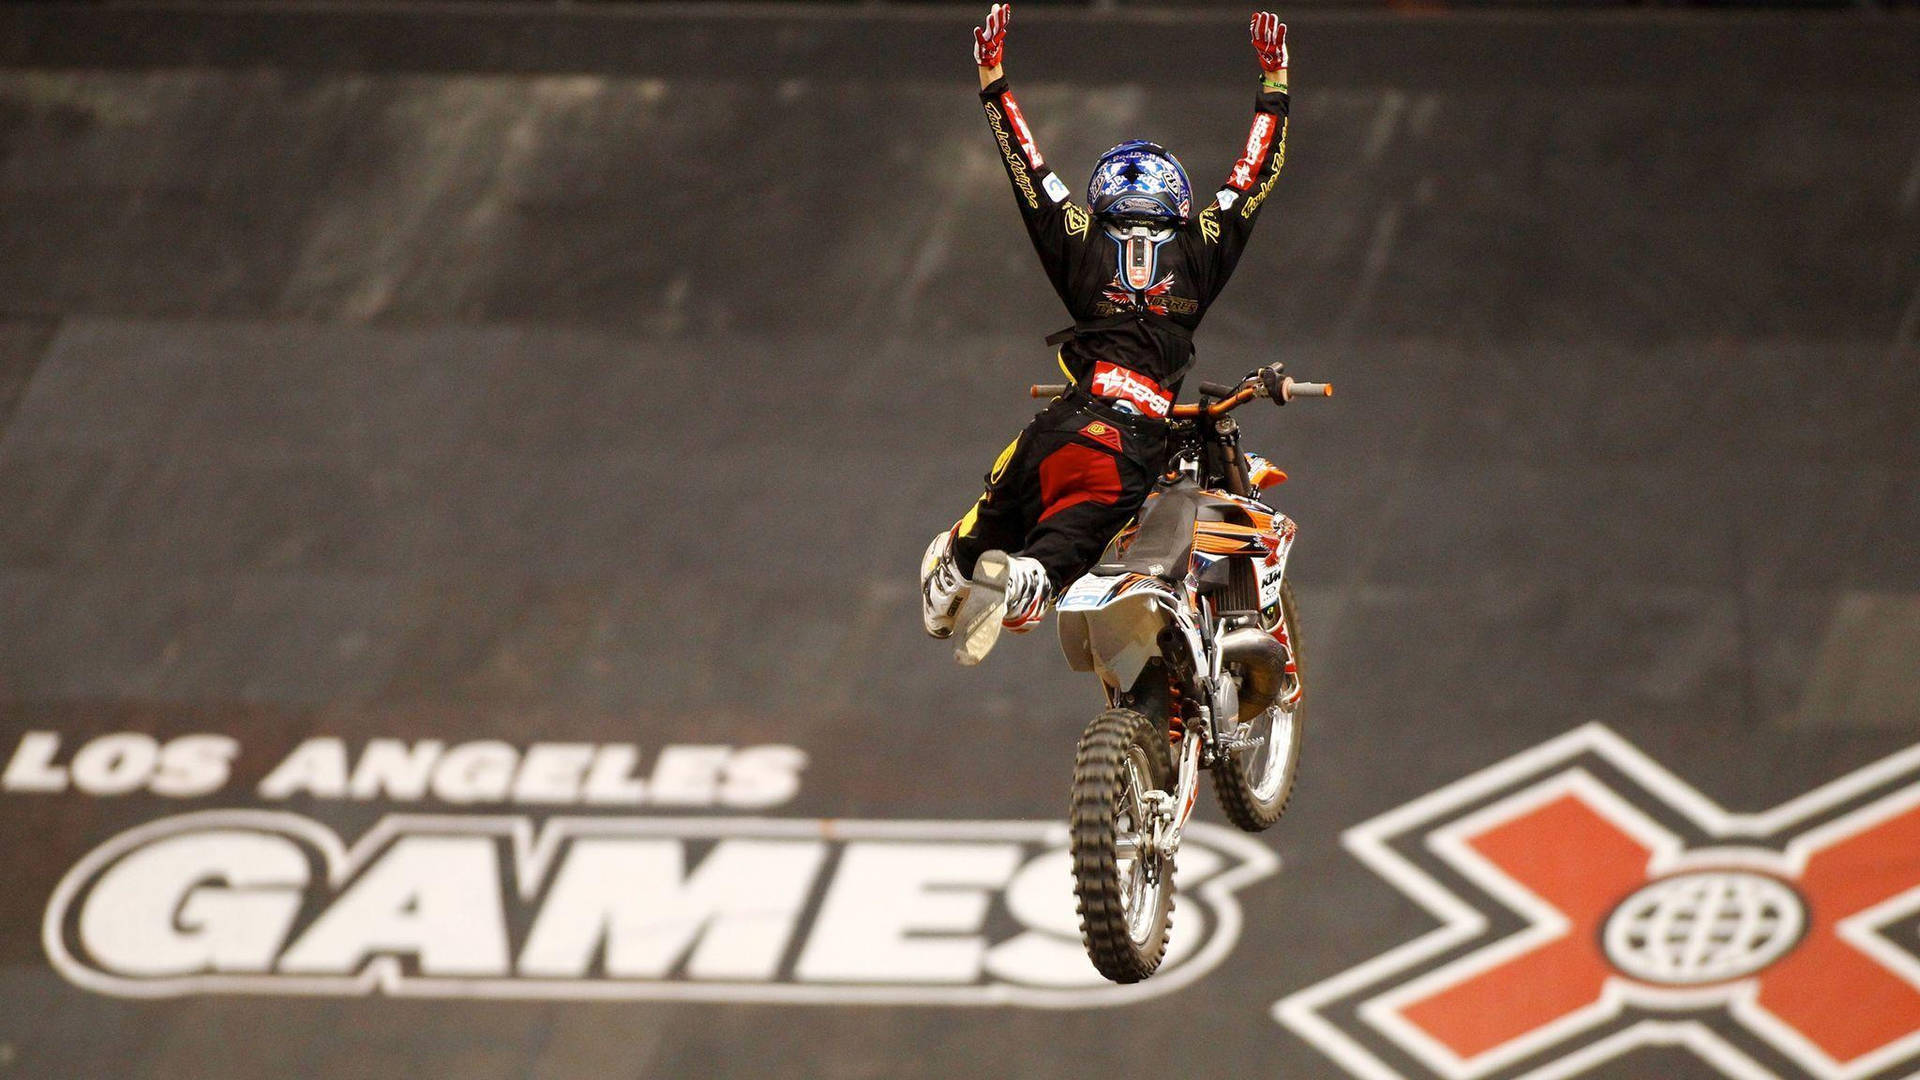 X Games Motocross No-hand Stunt